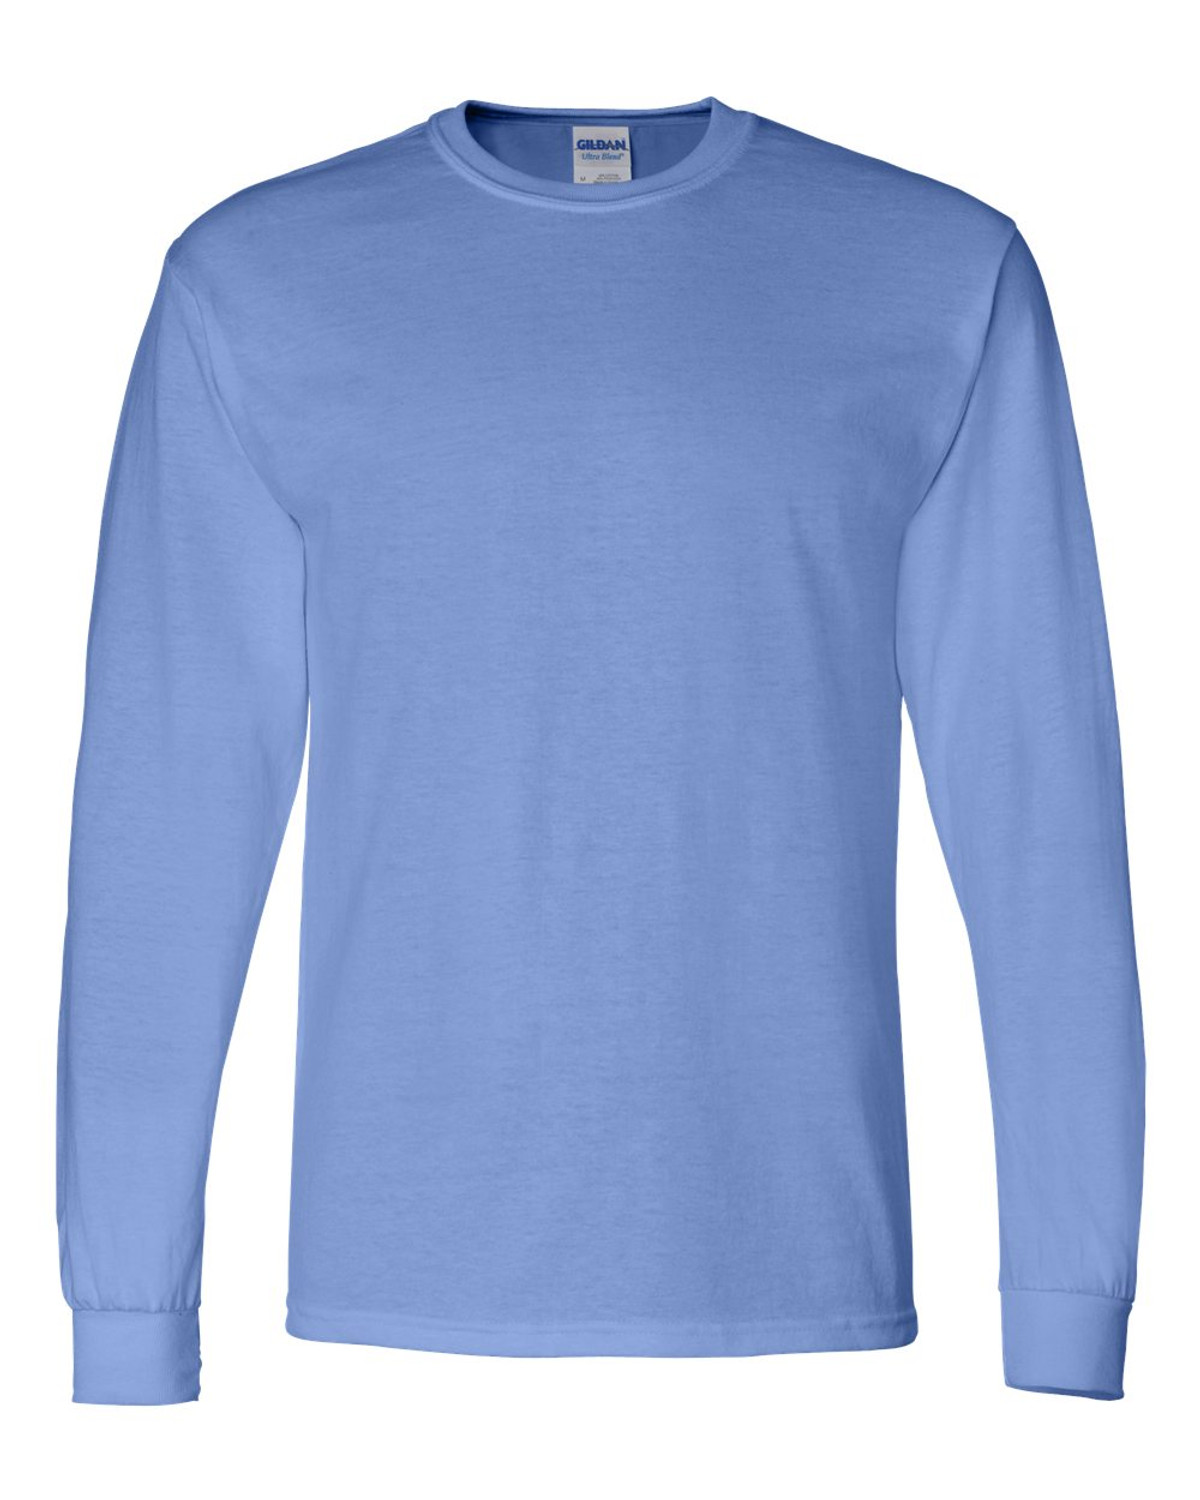 Gildan 8400 DryBlend Long Sleeve T-Shirt - Royal - L